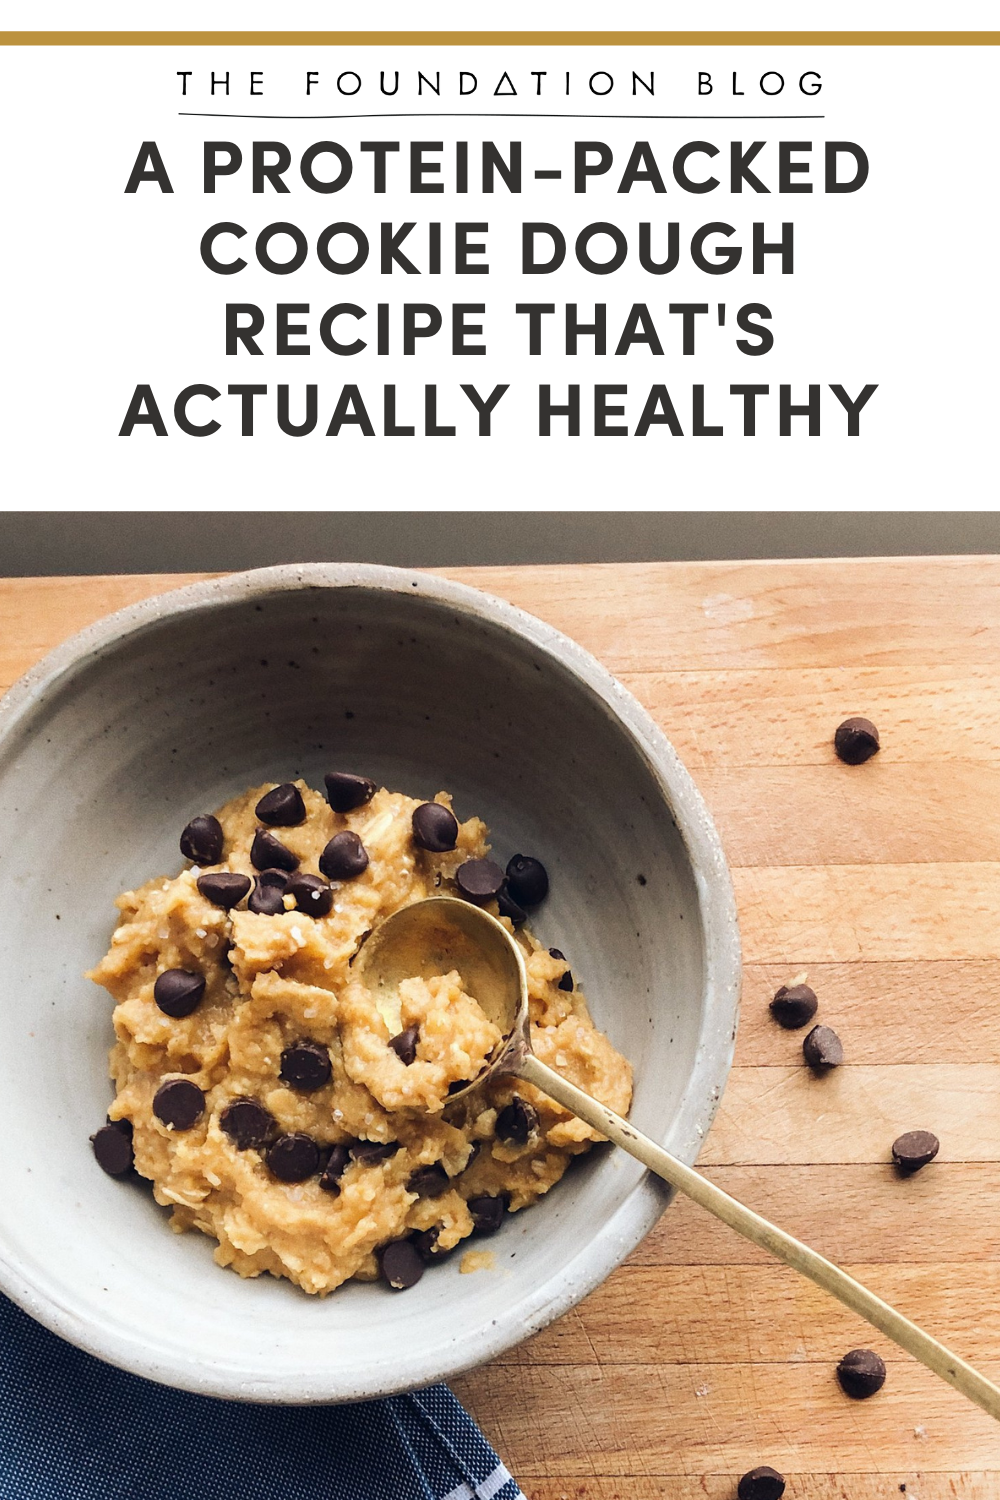 Healthy cookie recipe